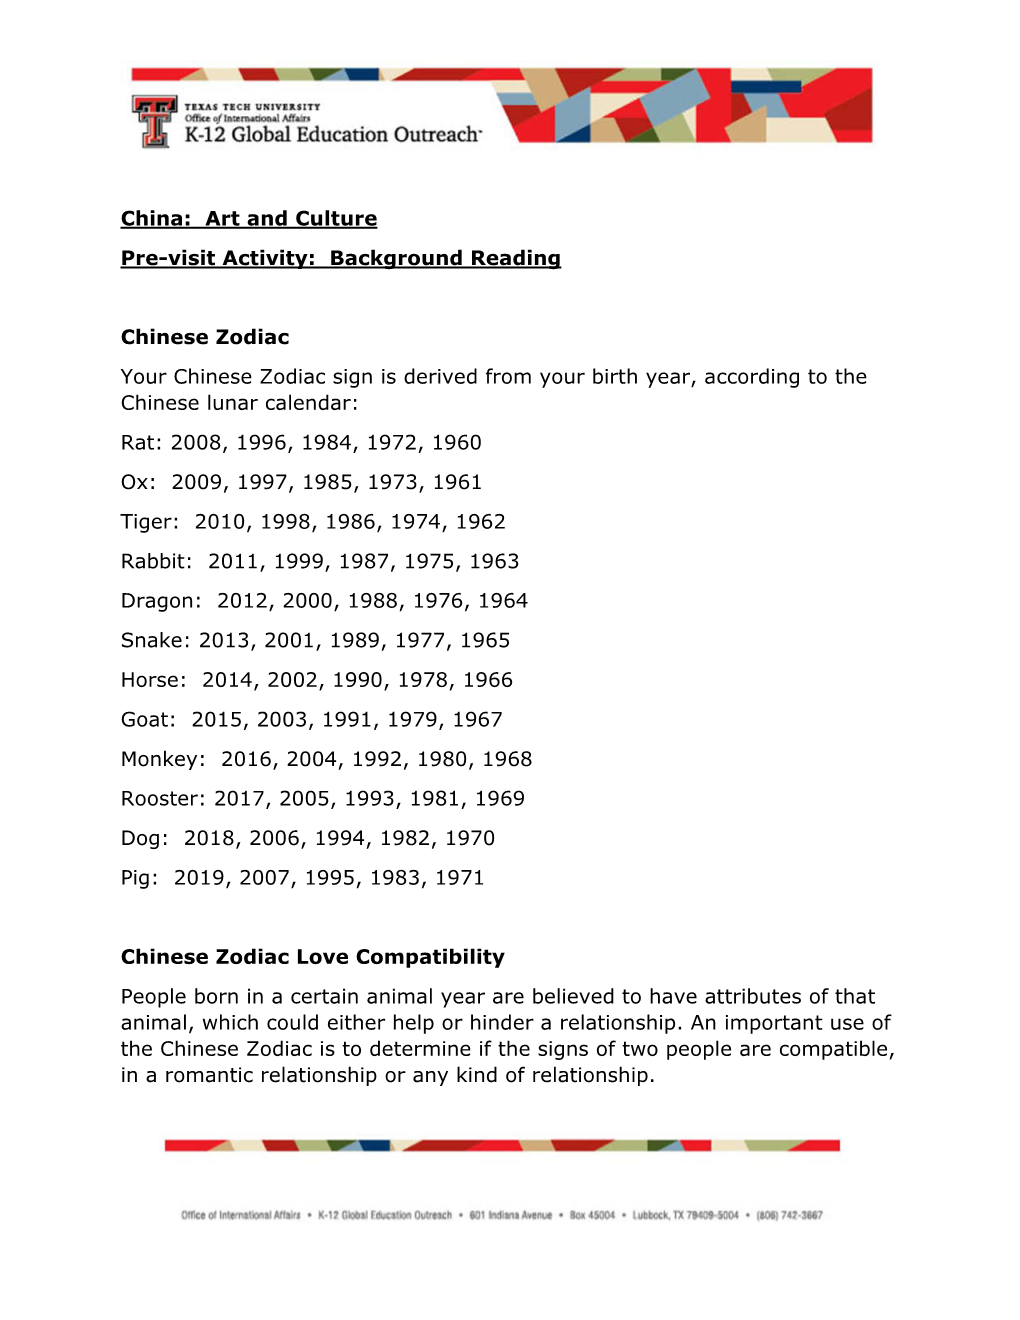 China Art & Culture Pre-Activity